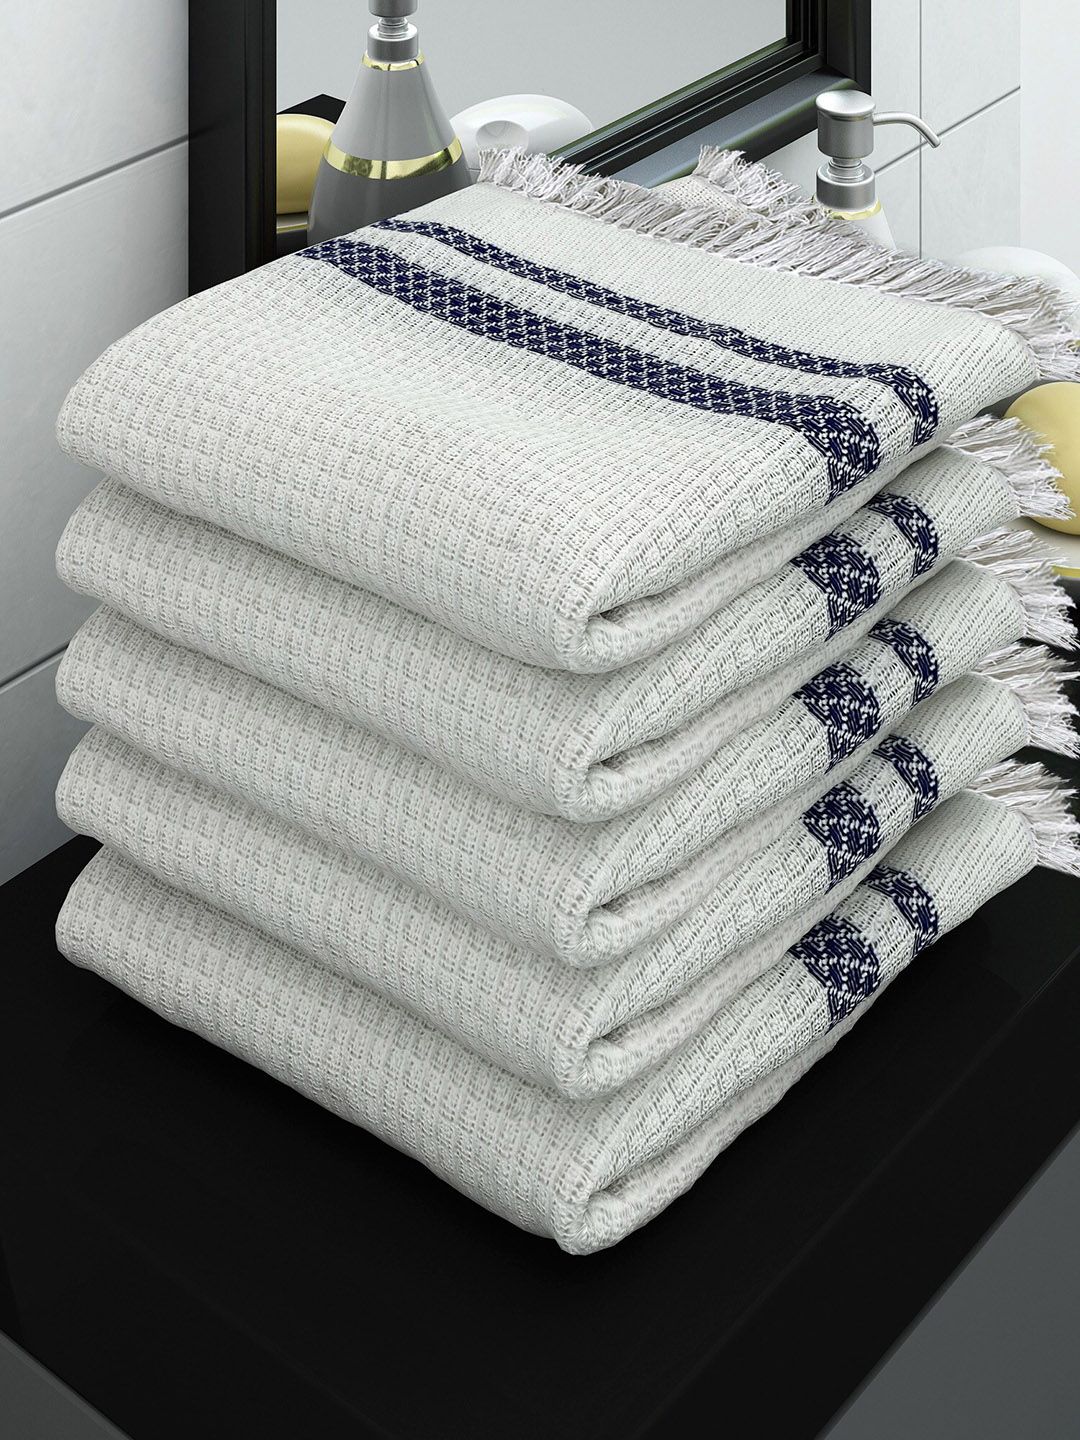 Athom Trendz Set of 5 White Cotton Bath Towel Price in India